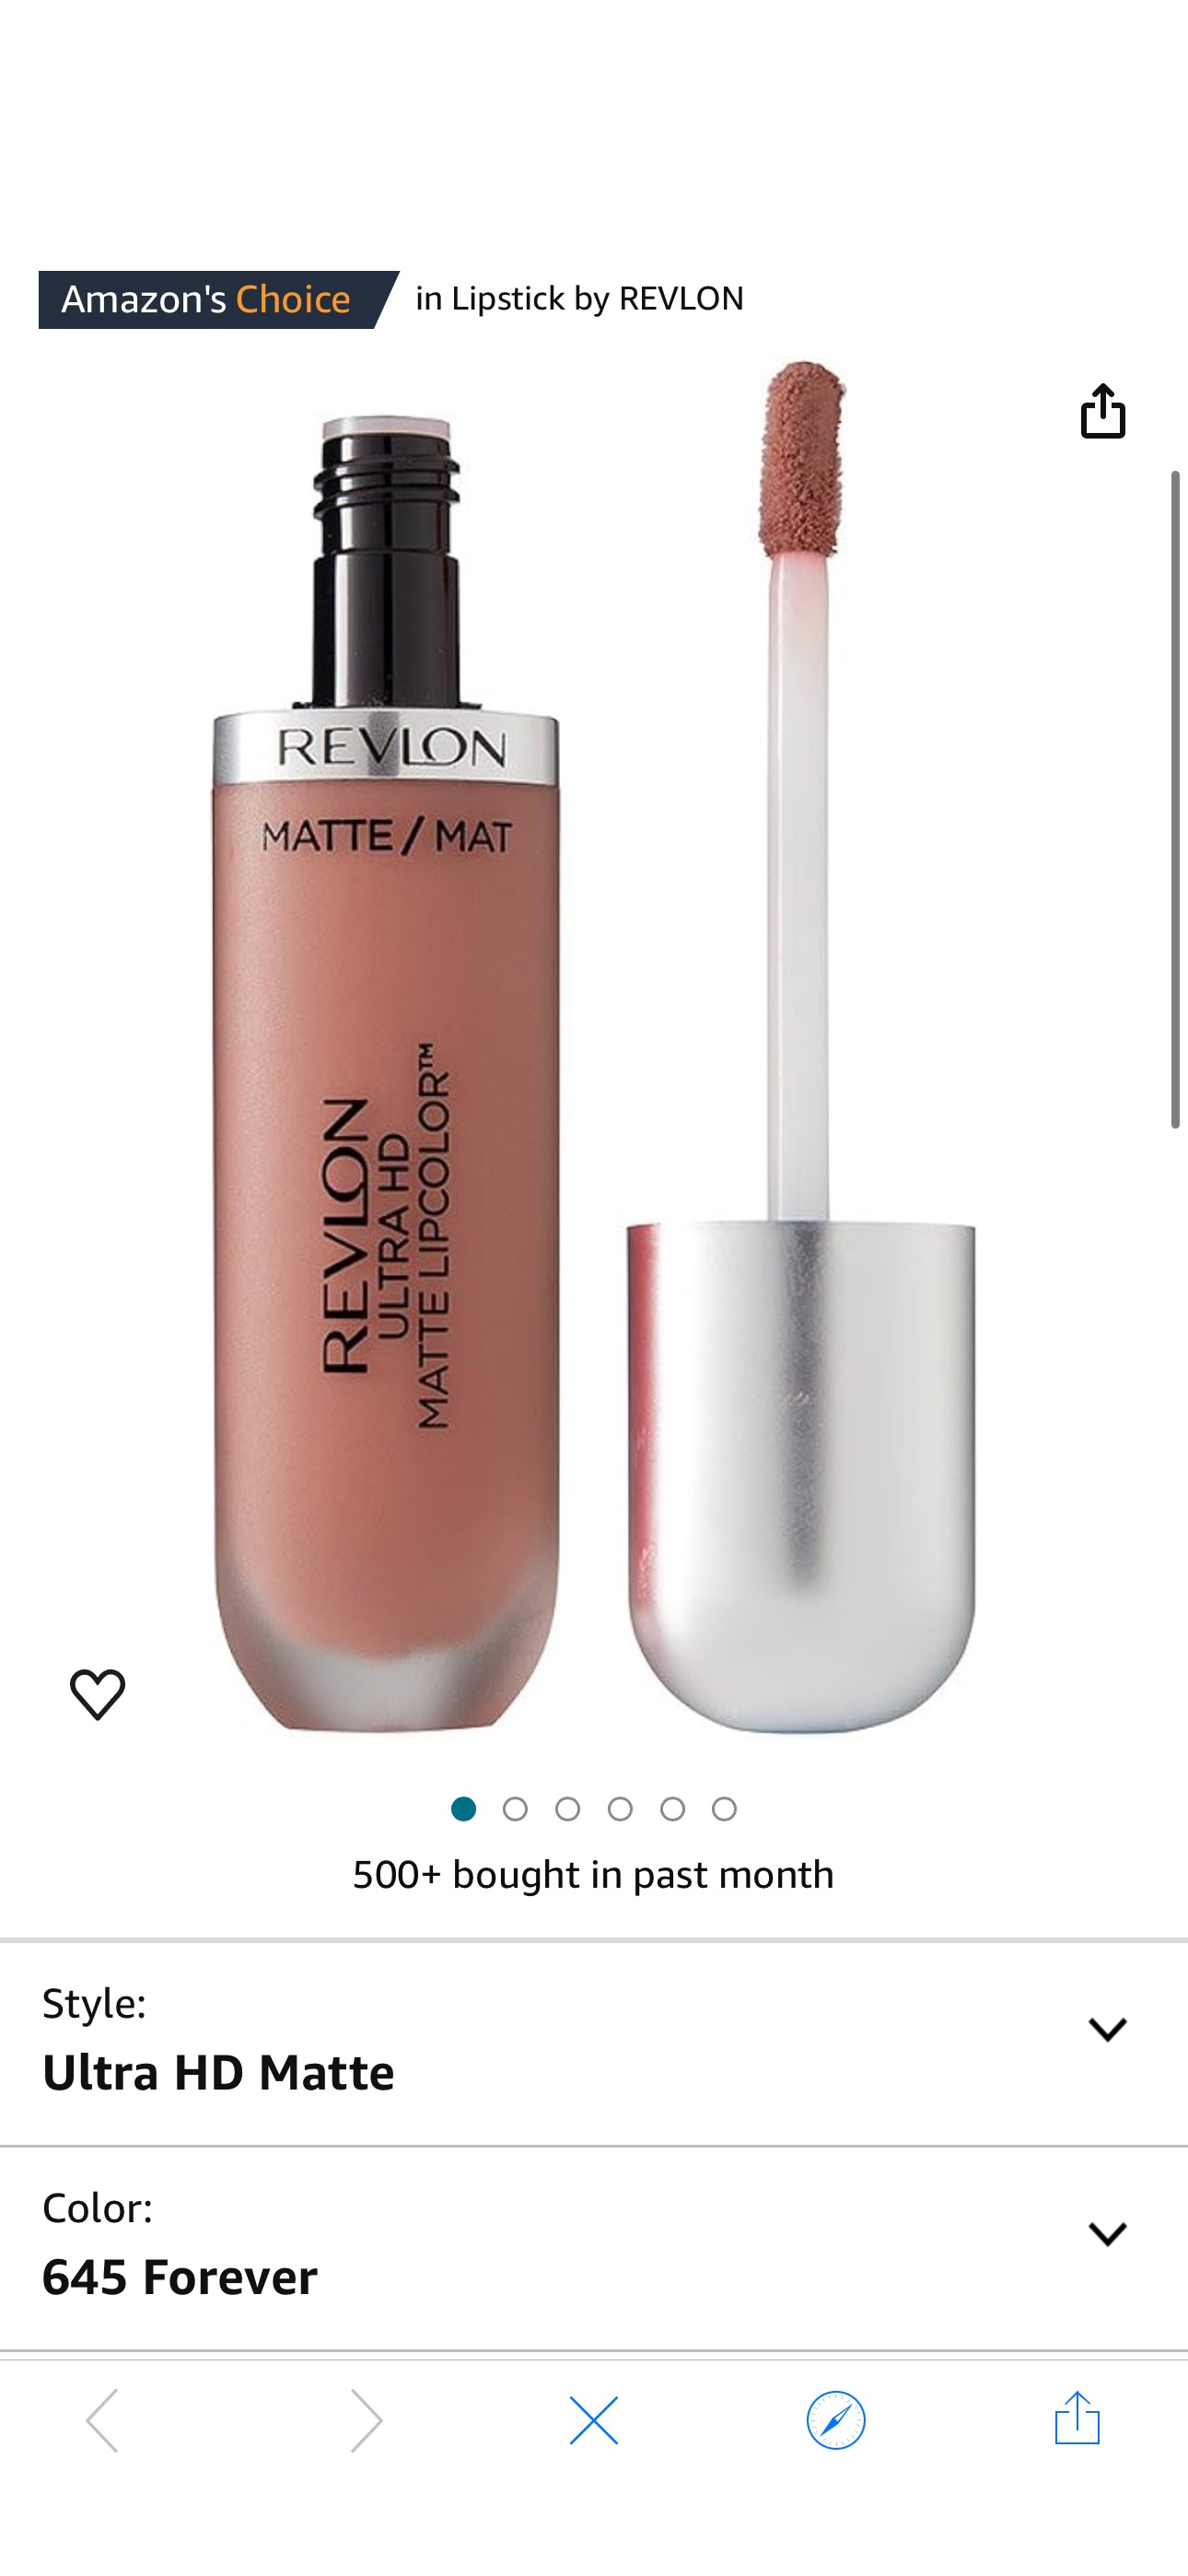 Amazon.com : Revlon Ultra HD Matte Lipcolor, Velvety Lightweight Matte Liquid Lipstick In Nude / Brown, Forever (645), 0.2 oz : Beauty & Personal Care